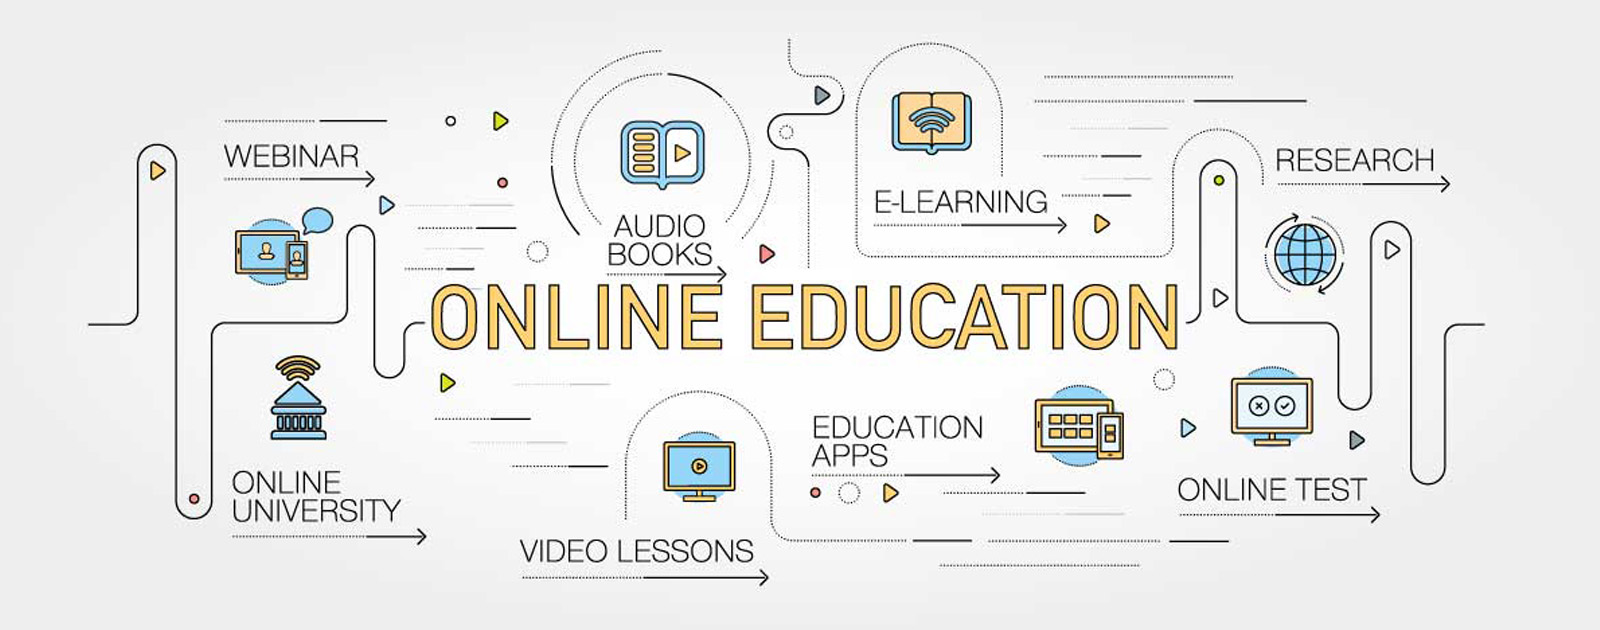 Online education impact graphic